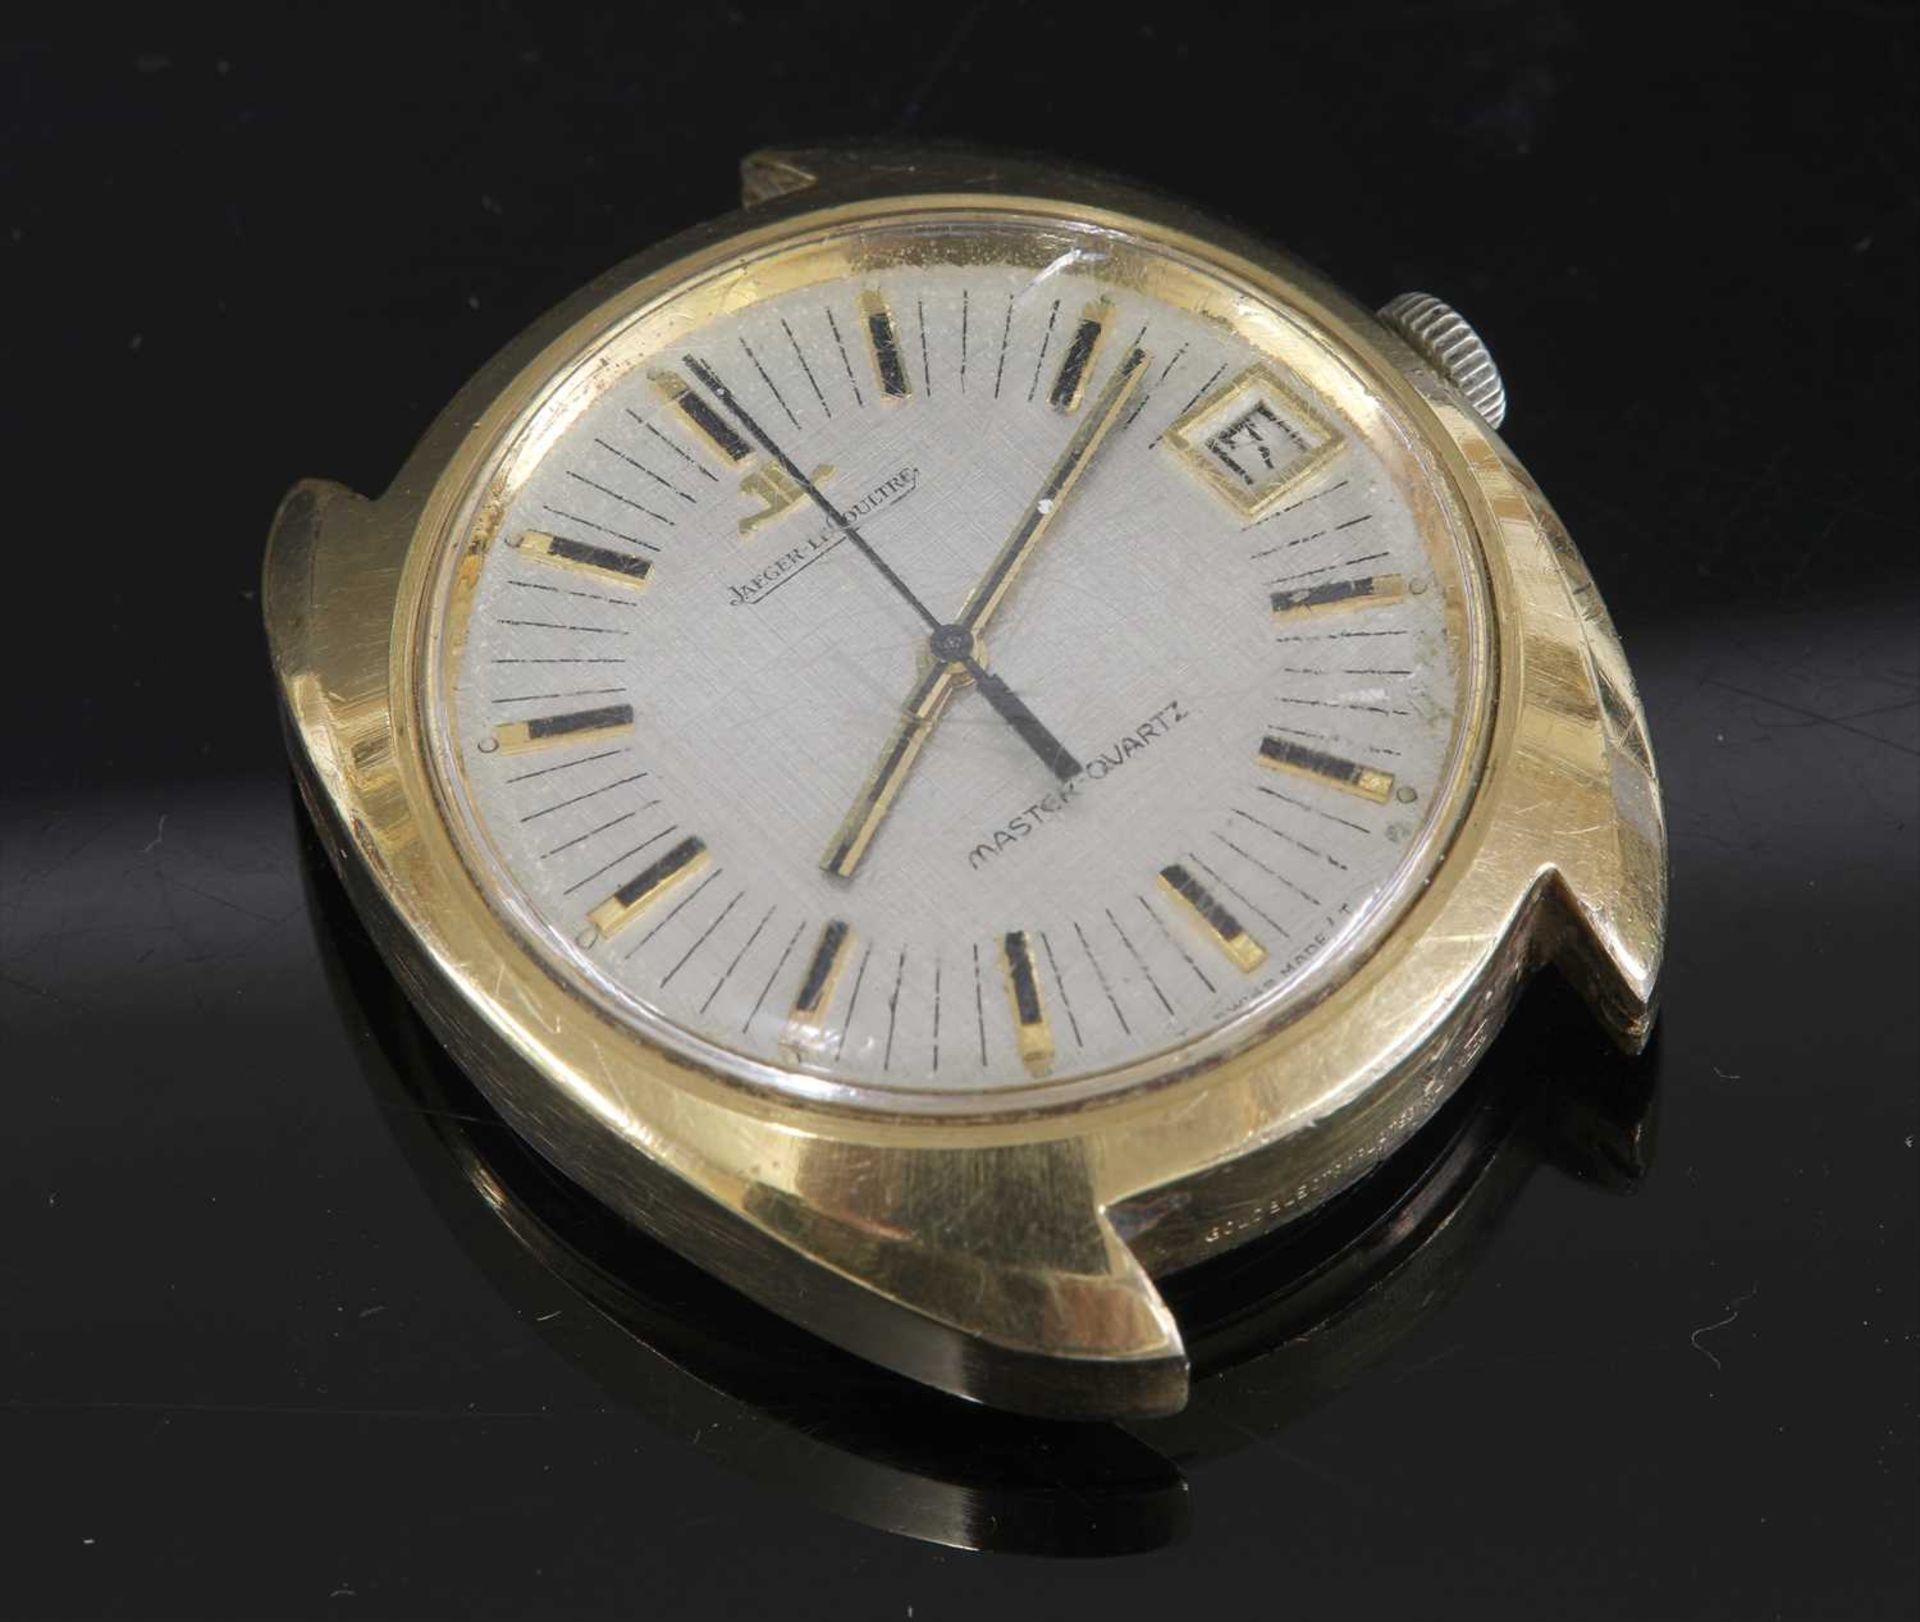 A gentlemen's gold-plated Jaeger-LeCoultre 'Master-Quartz' strap watch,